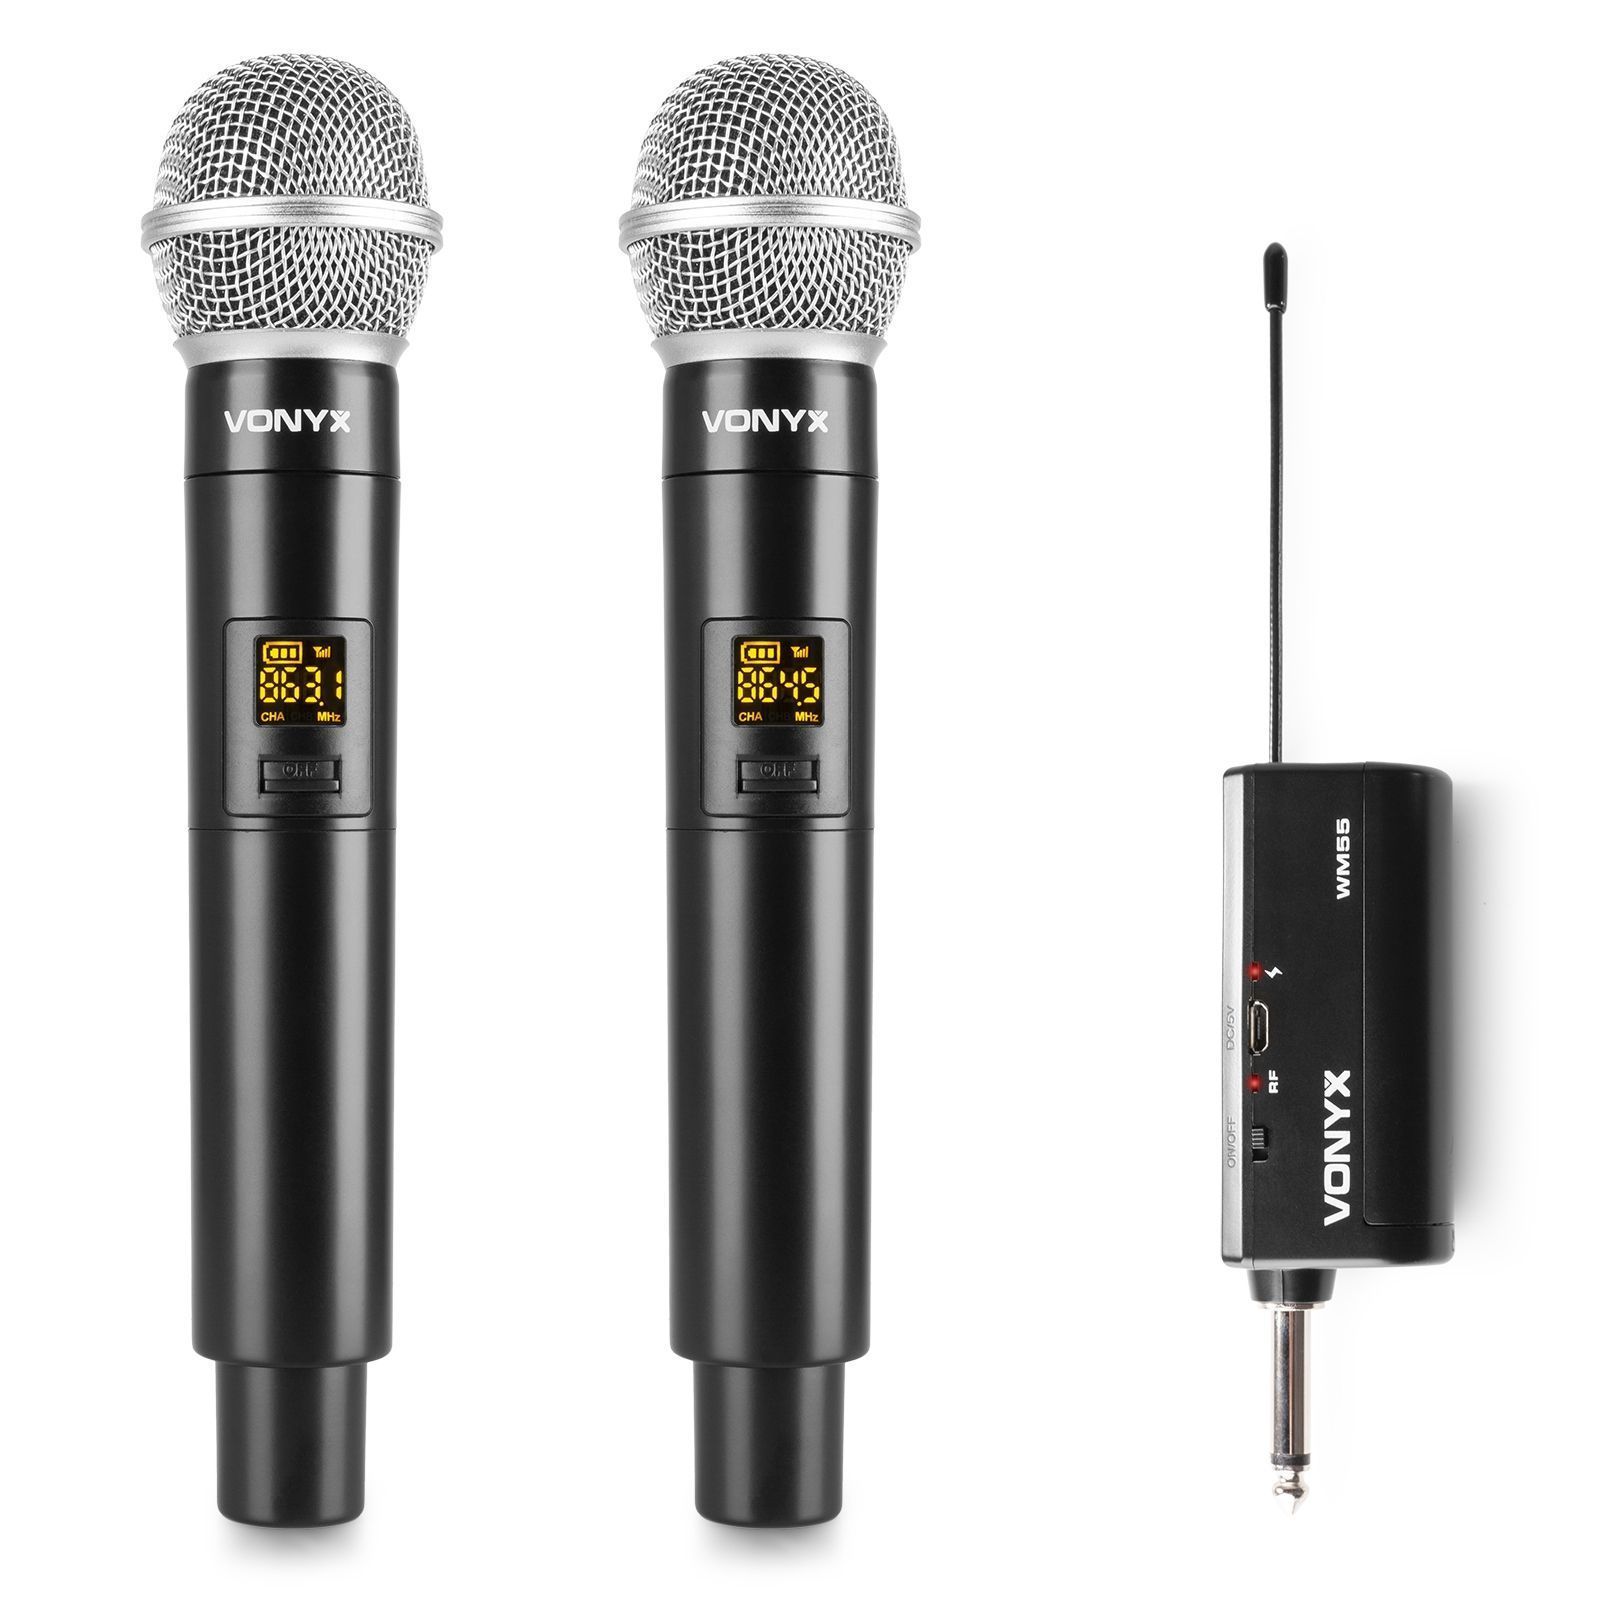 Vonyx WM552 plug-in trådlös mikrofonset med 2 mikrofoner - UHF